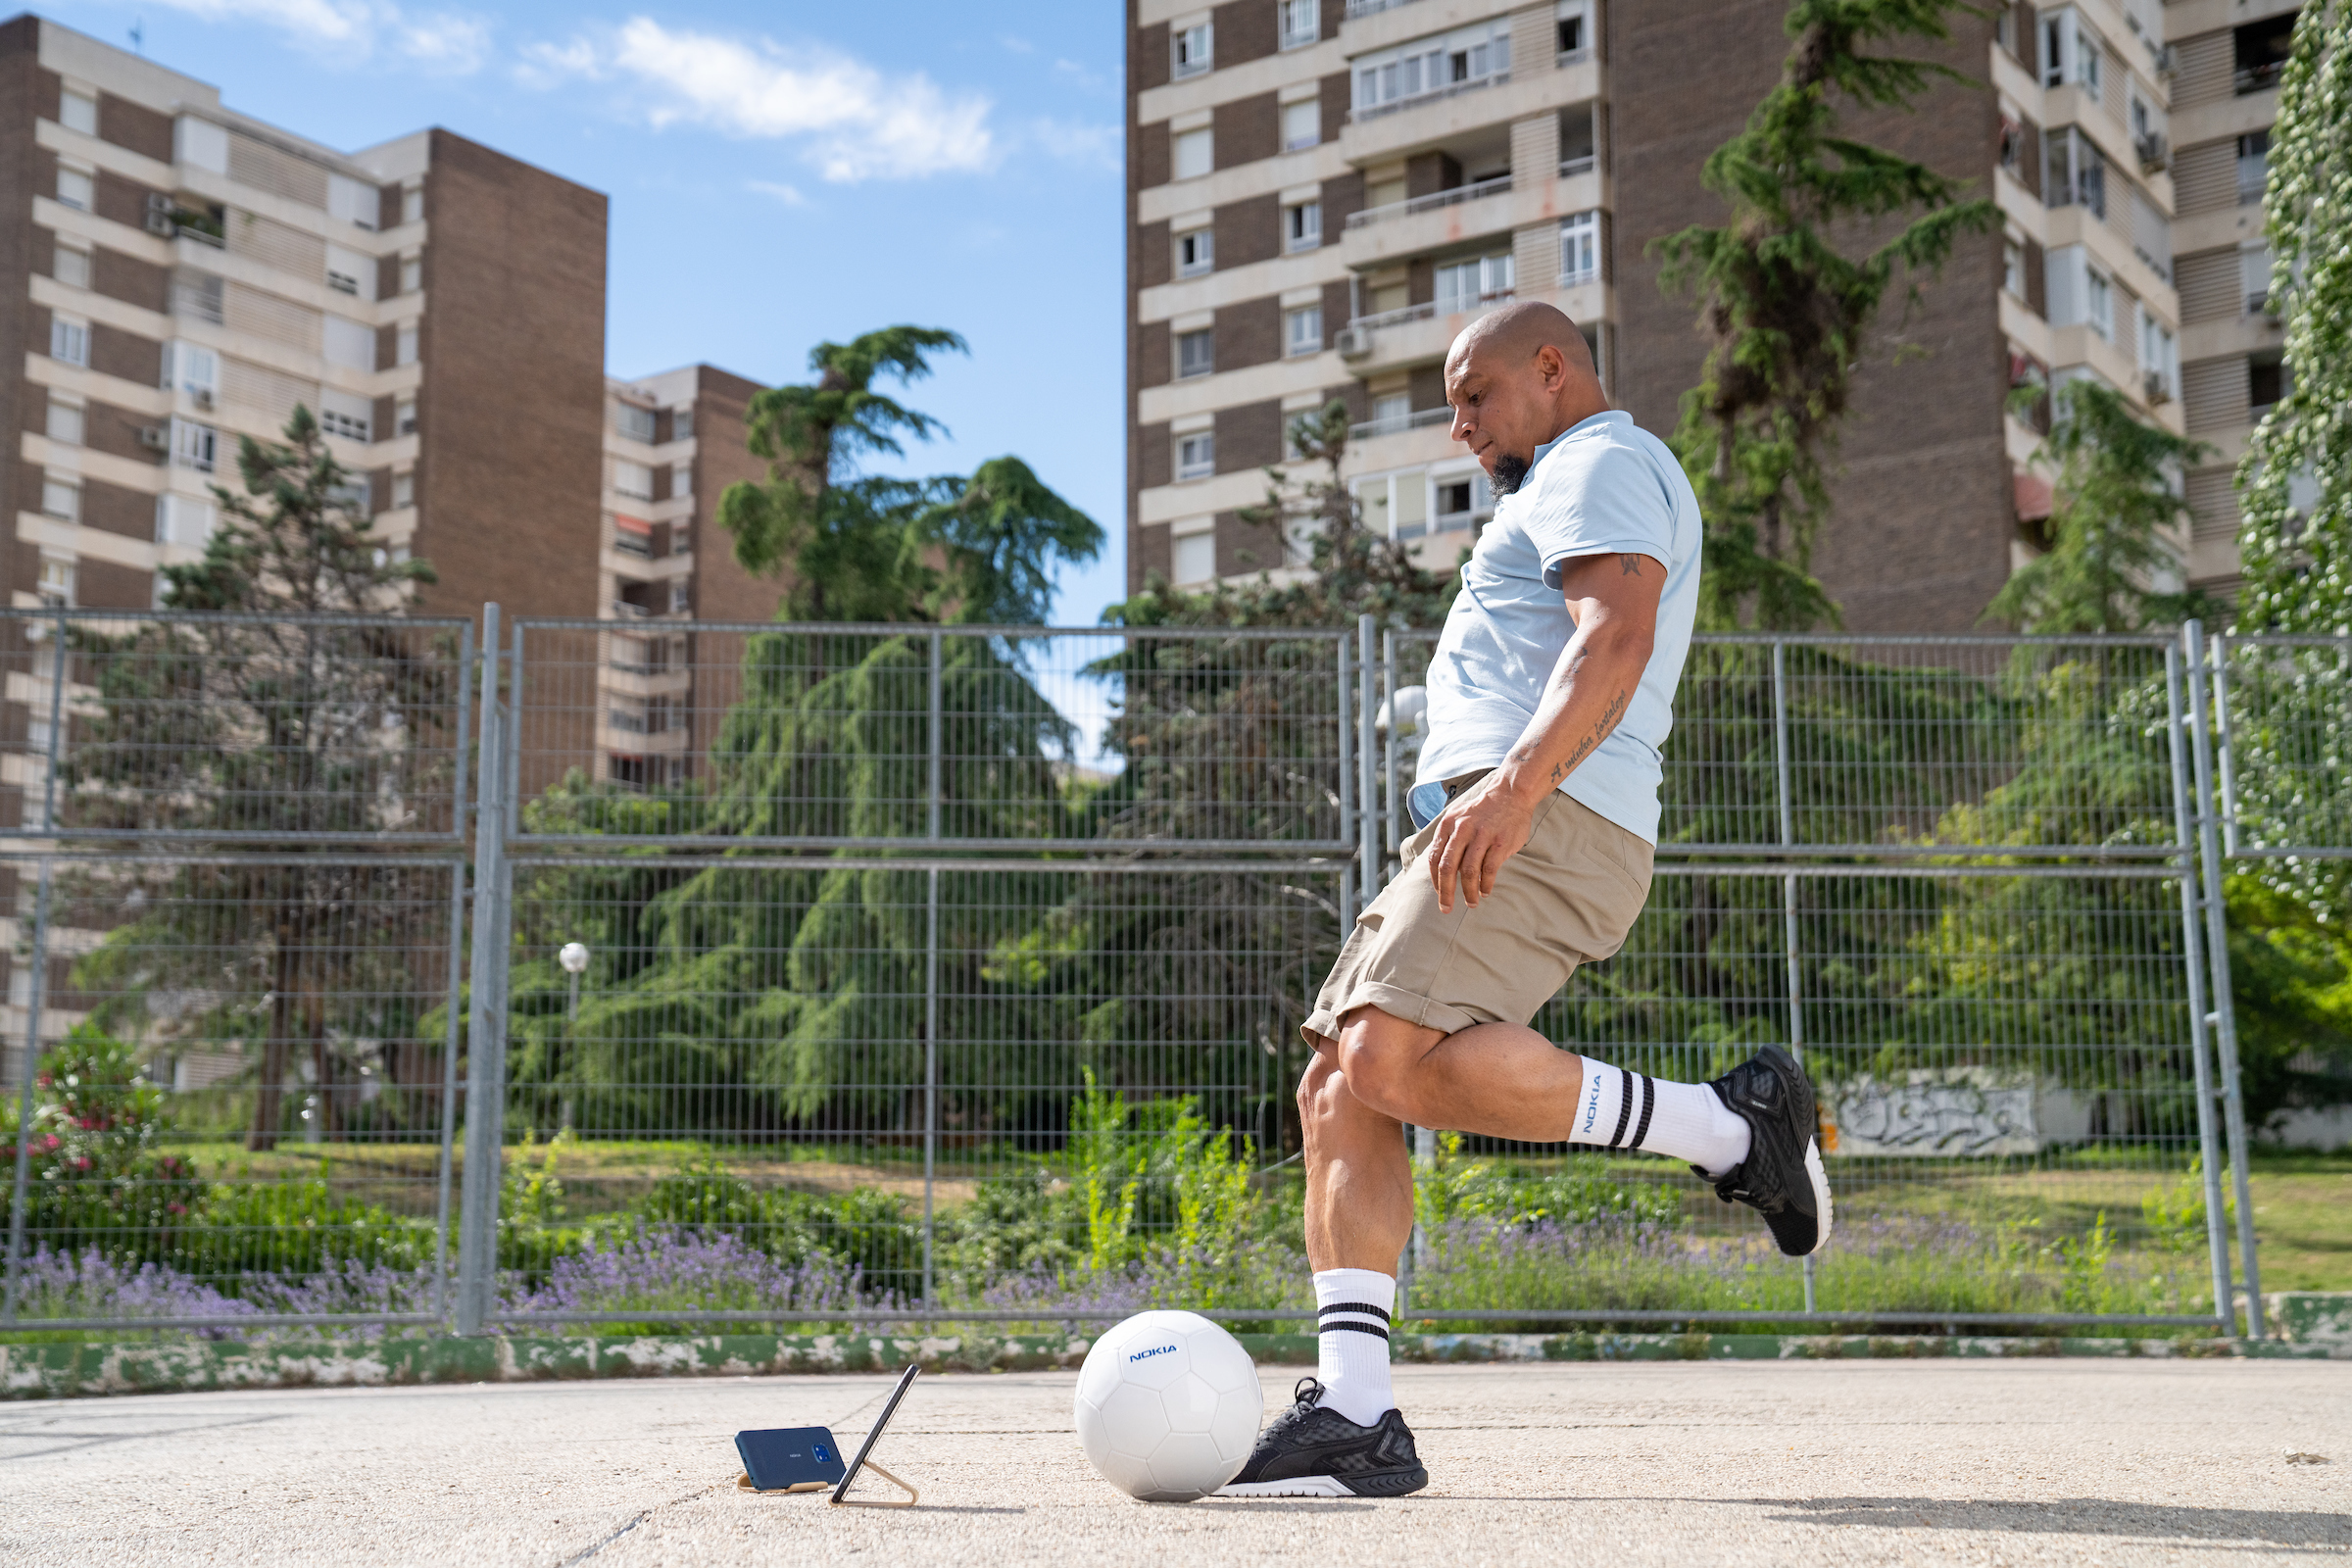 Roberto Carlos kicking a football in Nokia's smartphone advert